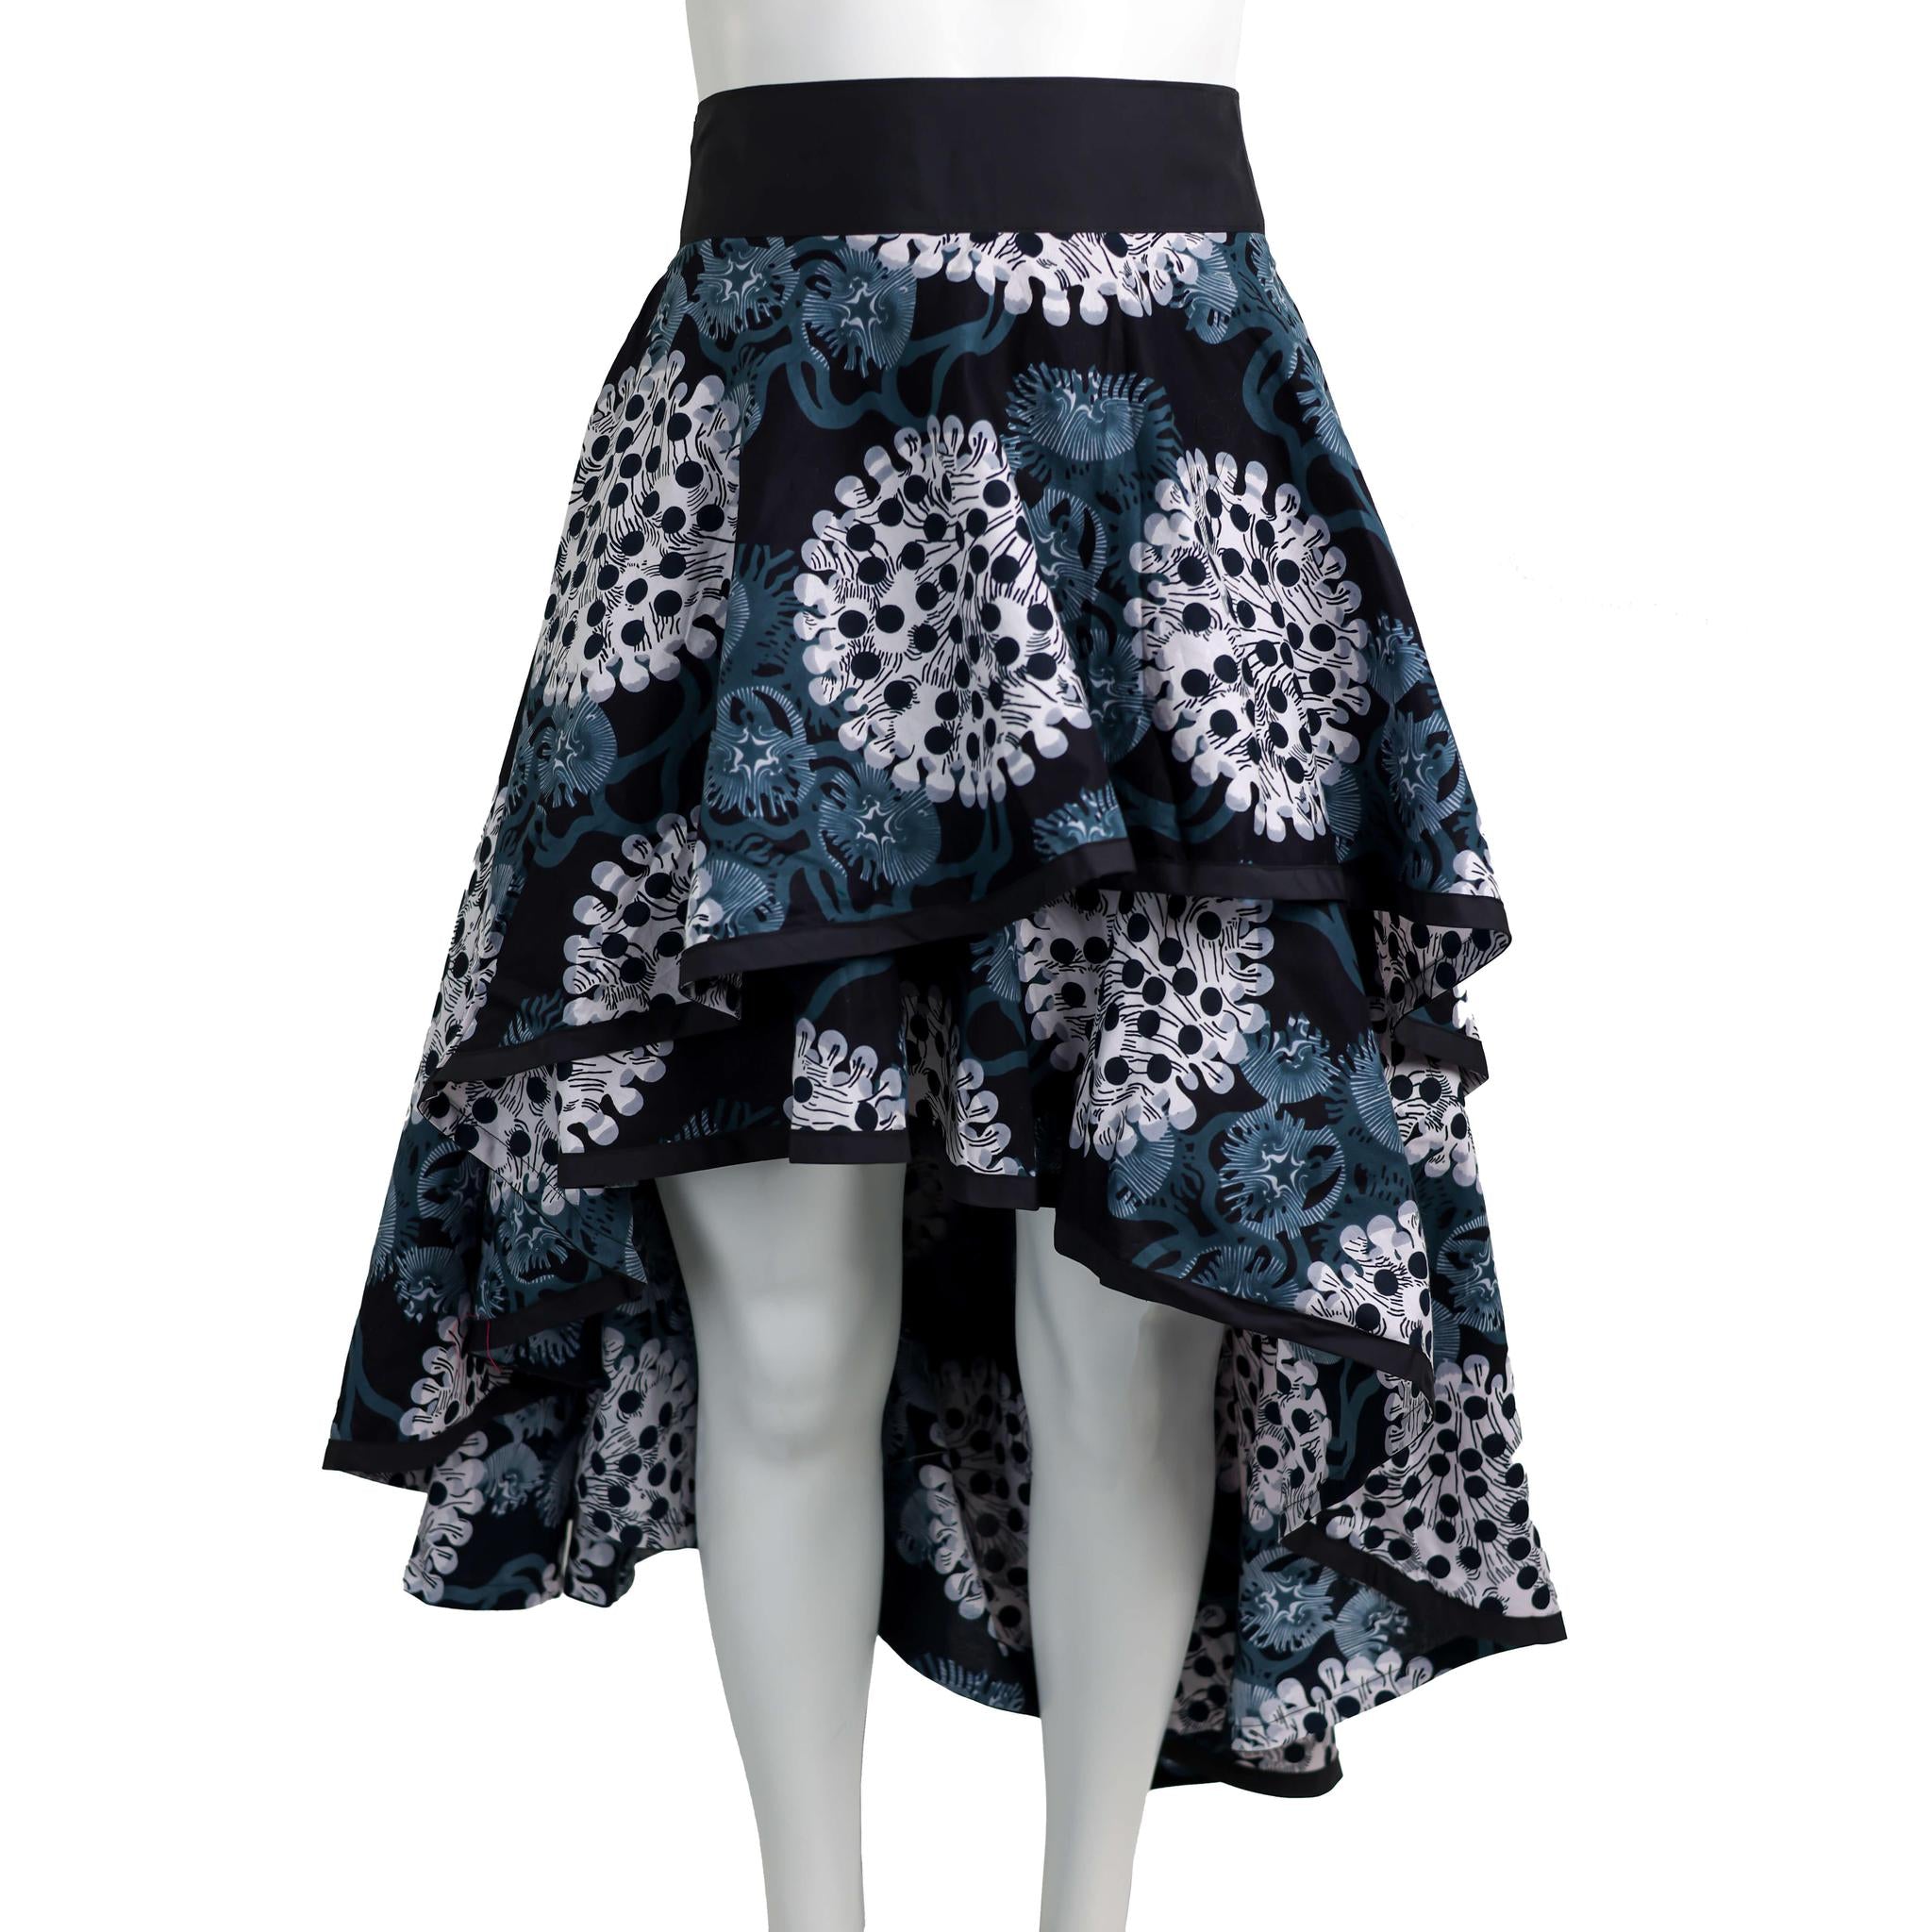 Layered Ankara Skirt with Belt